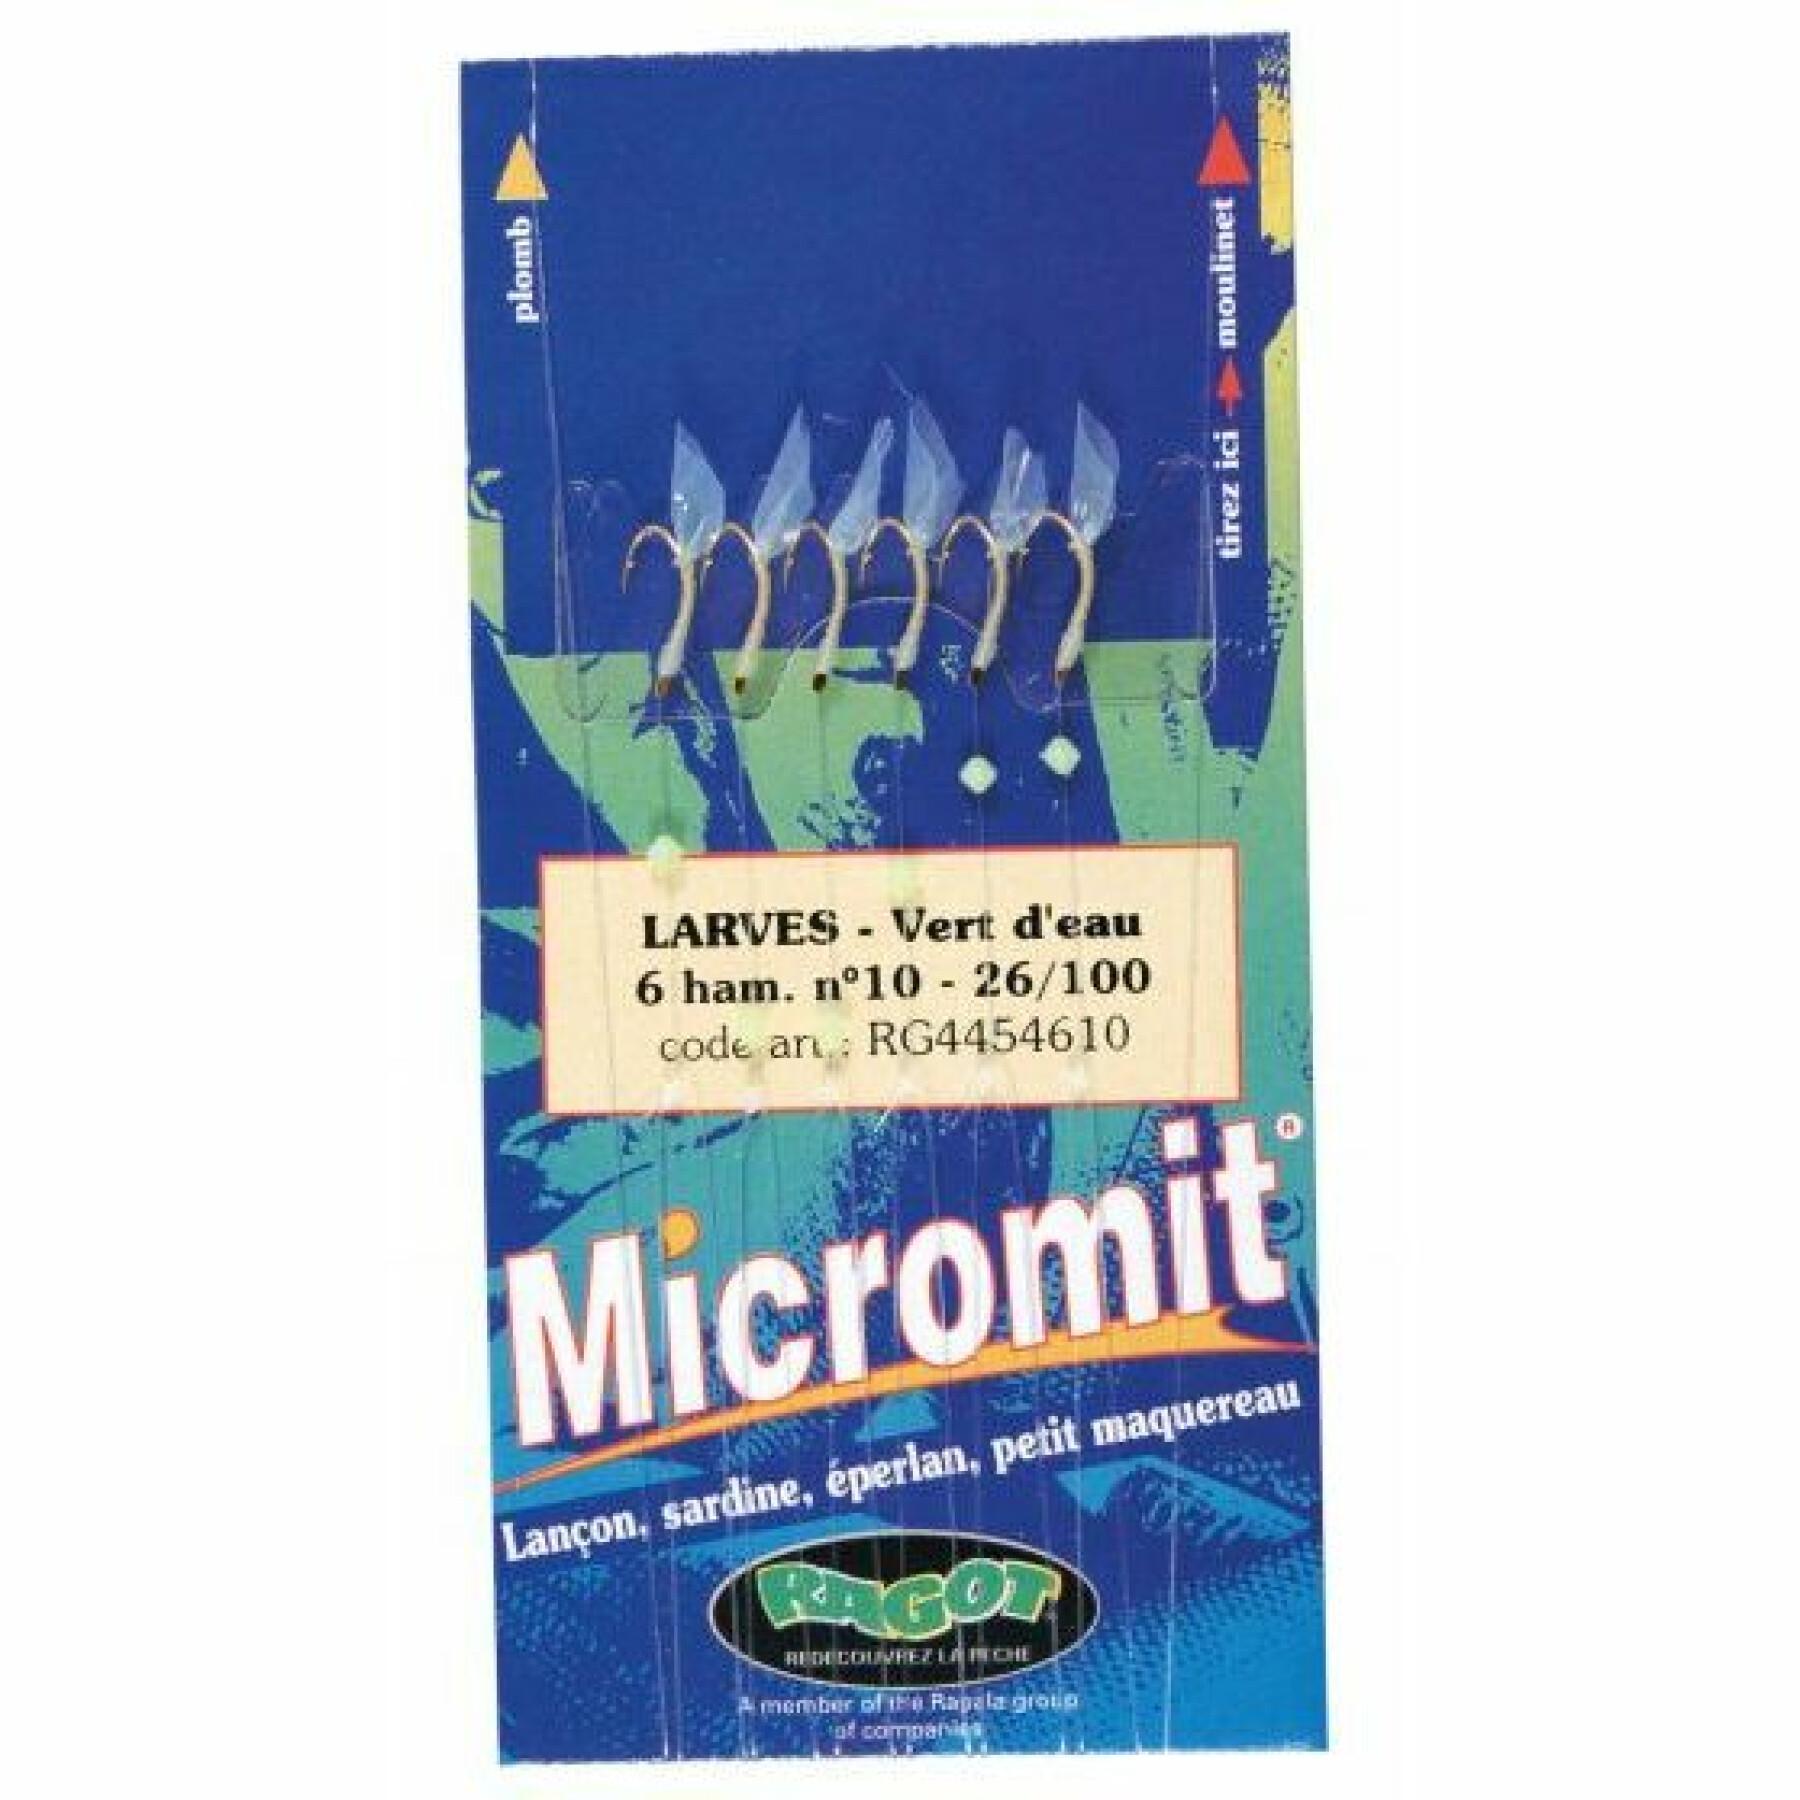 Iscas para larvas Ragot micromit (x6)